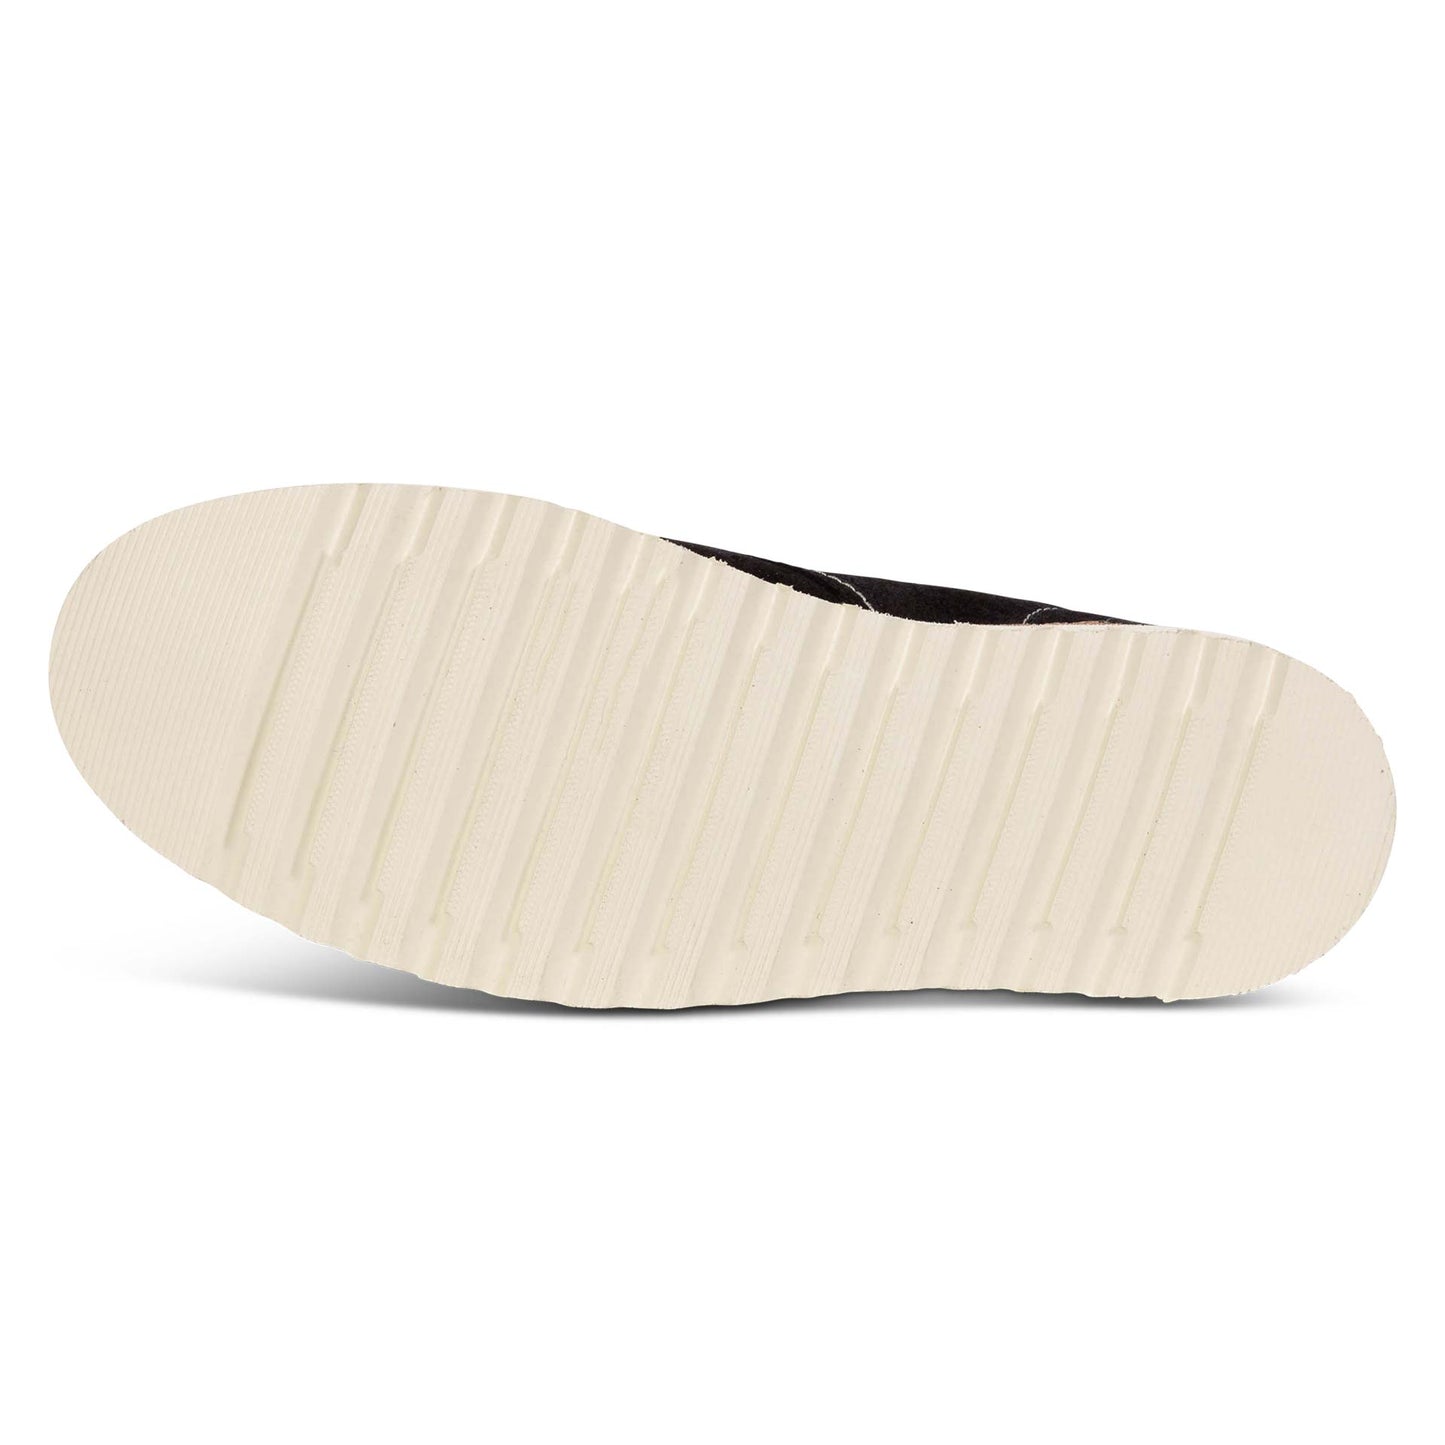 White rubber sole on FREEBIRD men's Carbon black suede shoe